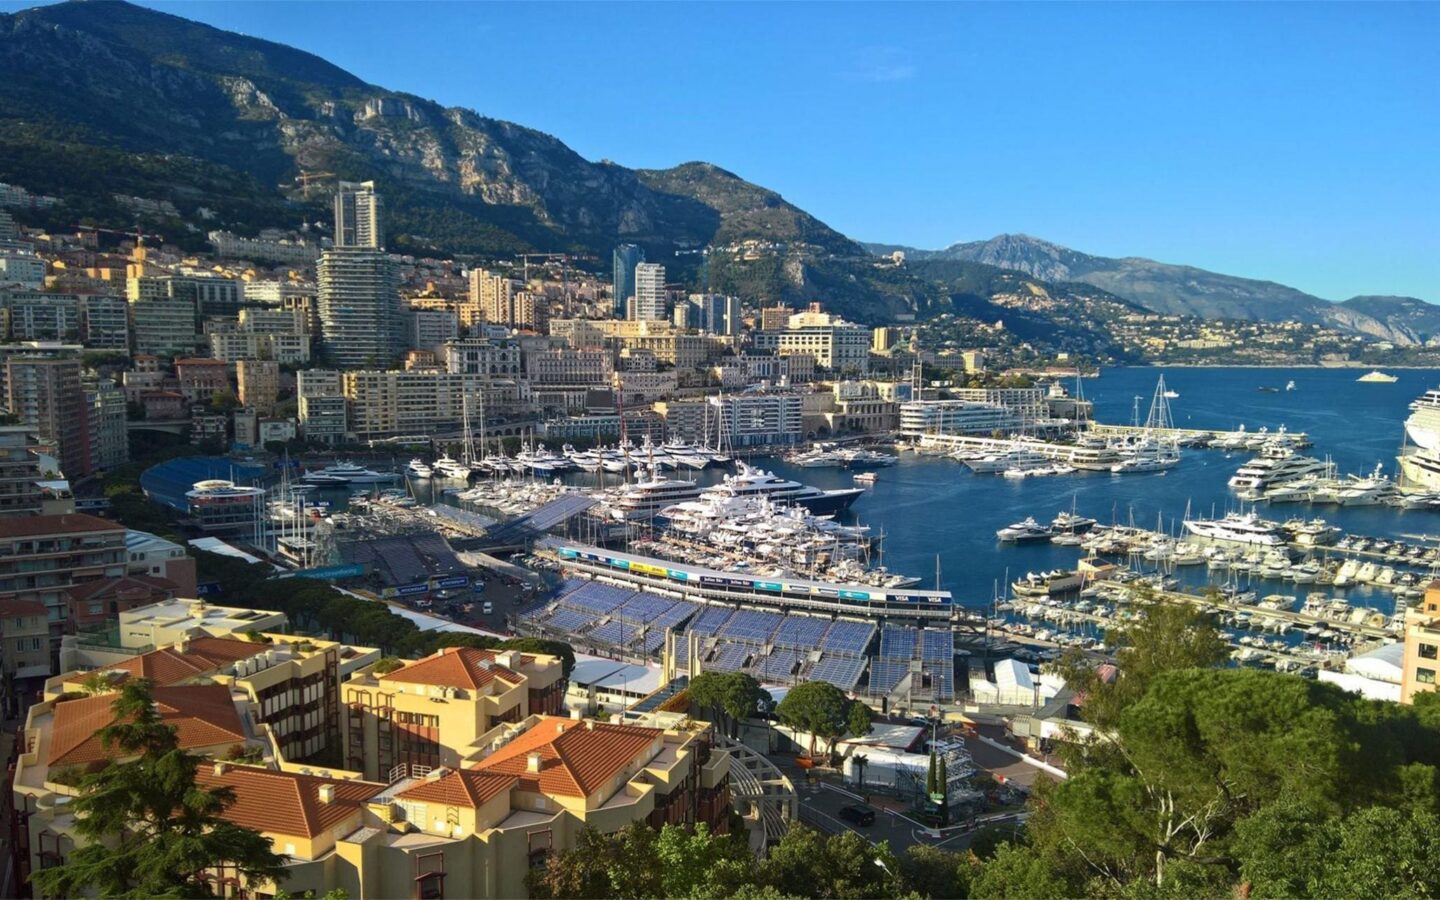 Cruise Your Way to the Monaco Grand Prix